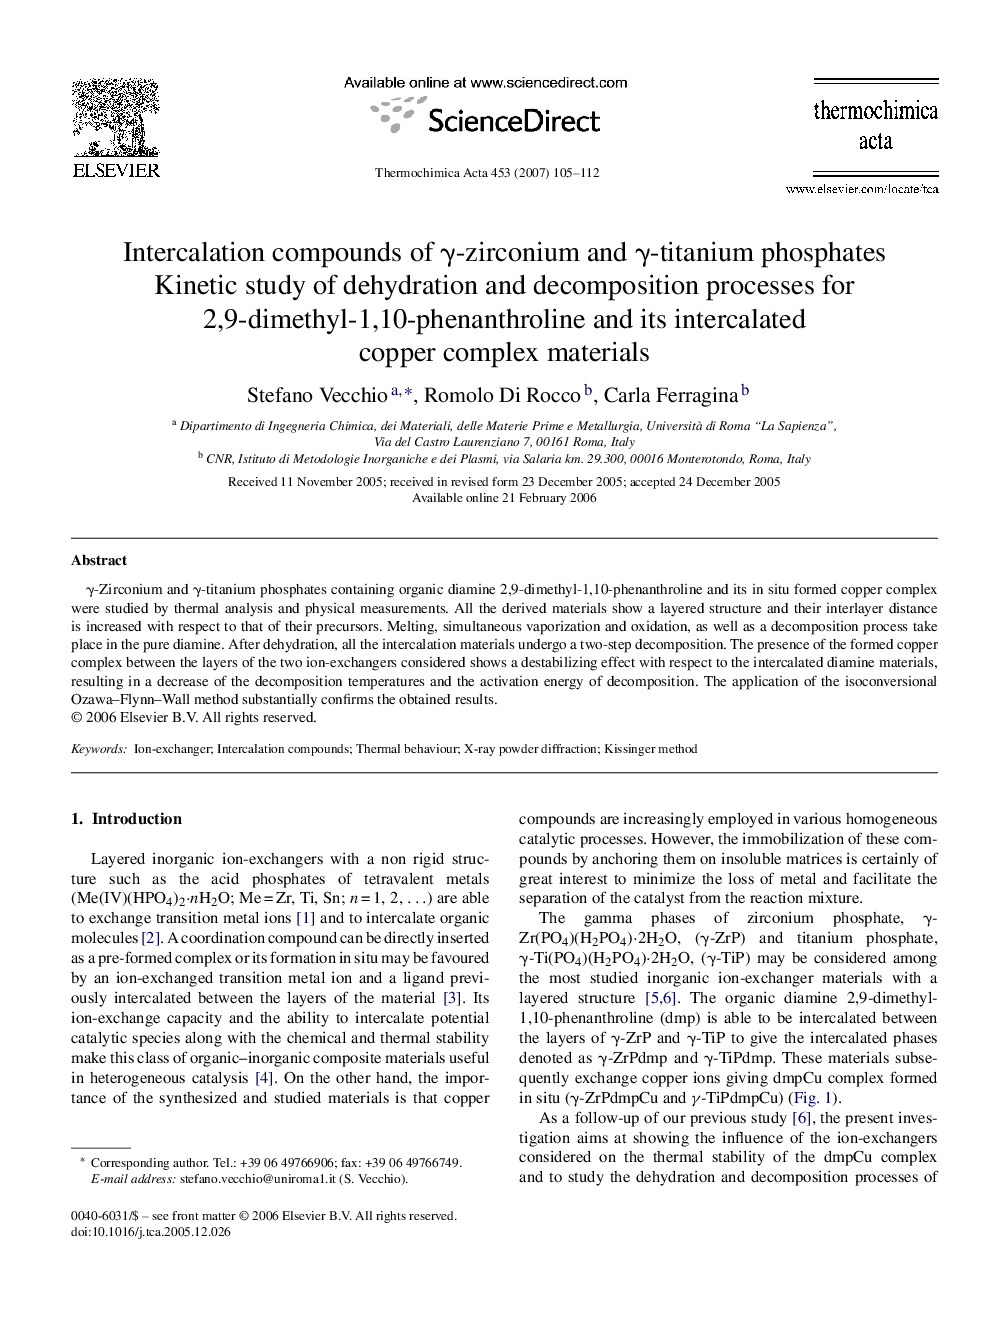 Intercalation compounds of Î³-zirconium and Î³-titanium phosphates